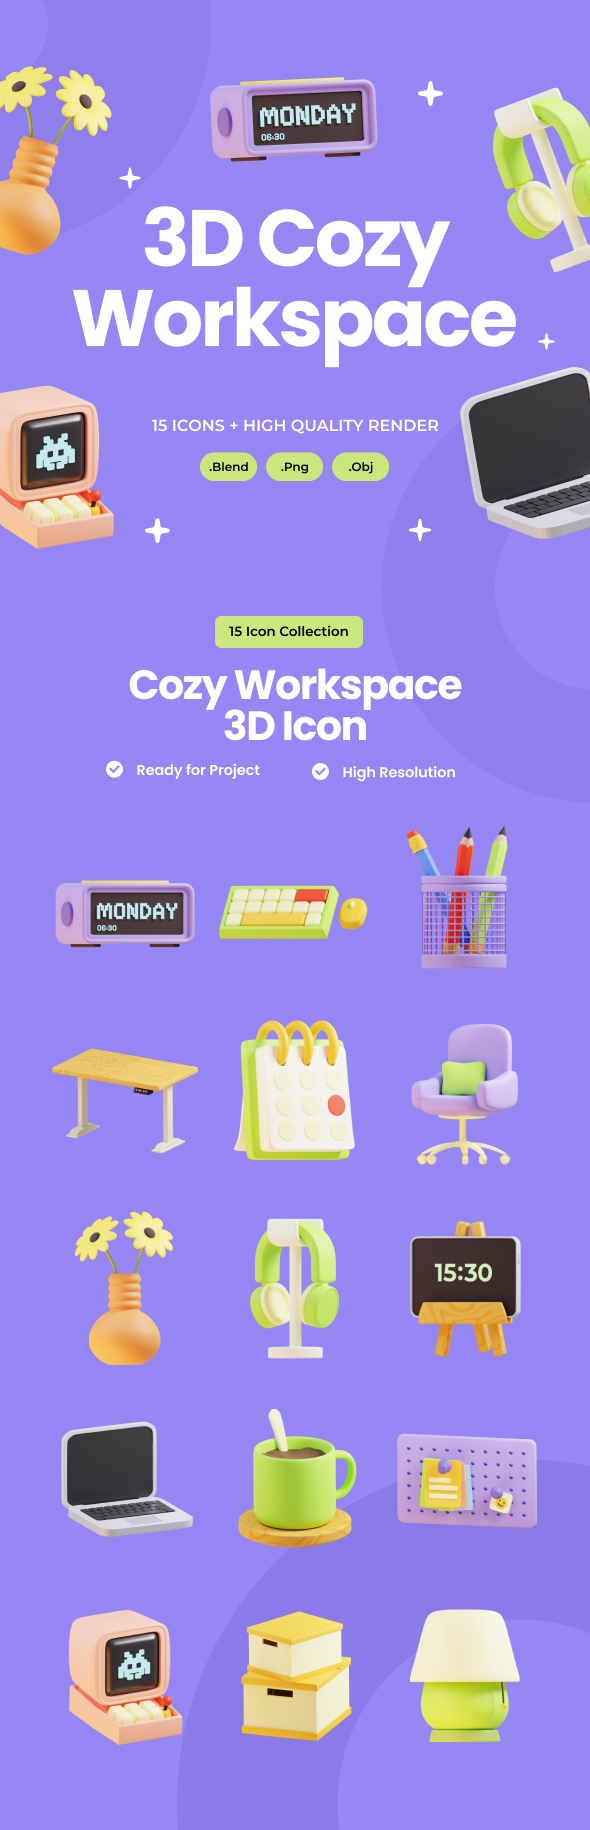 [DOWNLOAD]3D Cozy Workspace